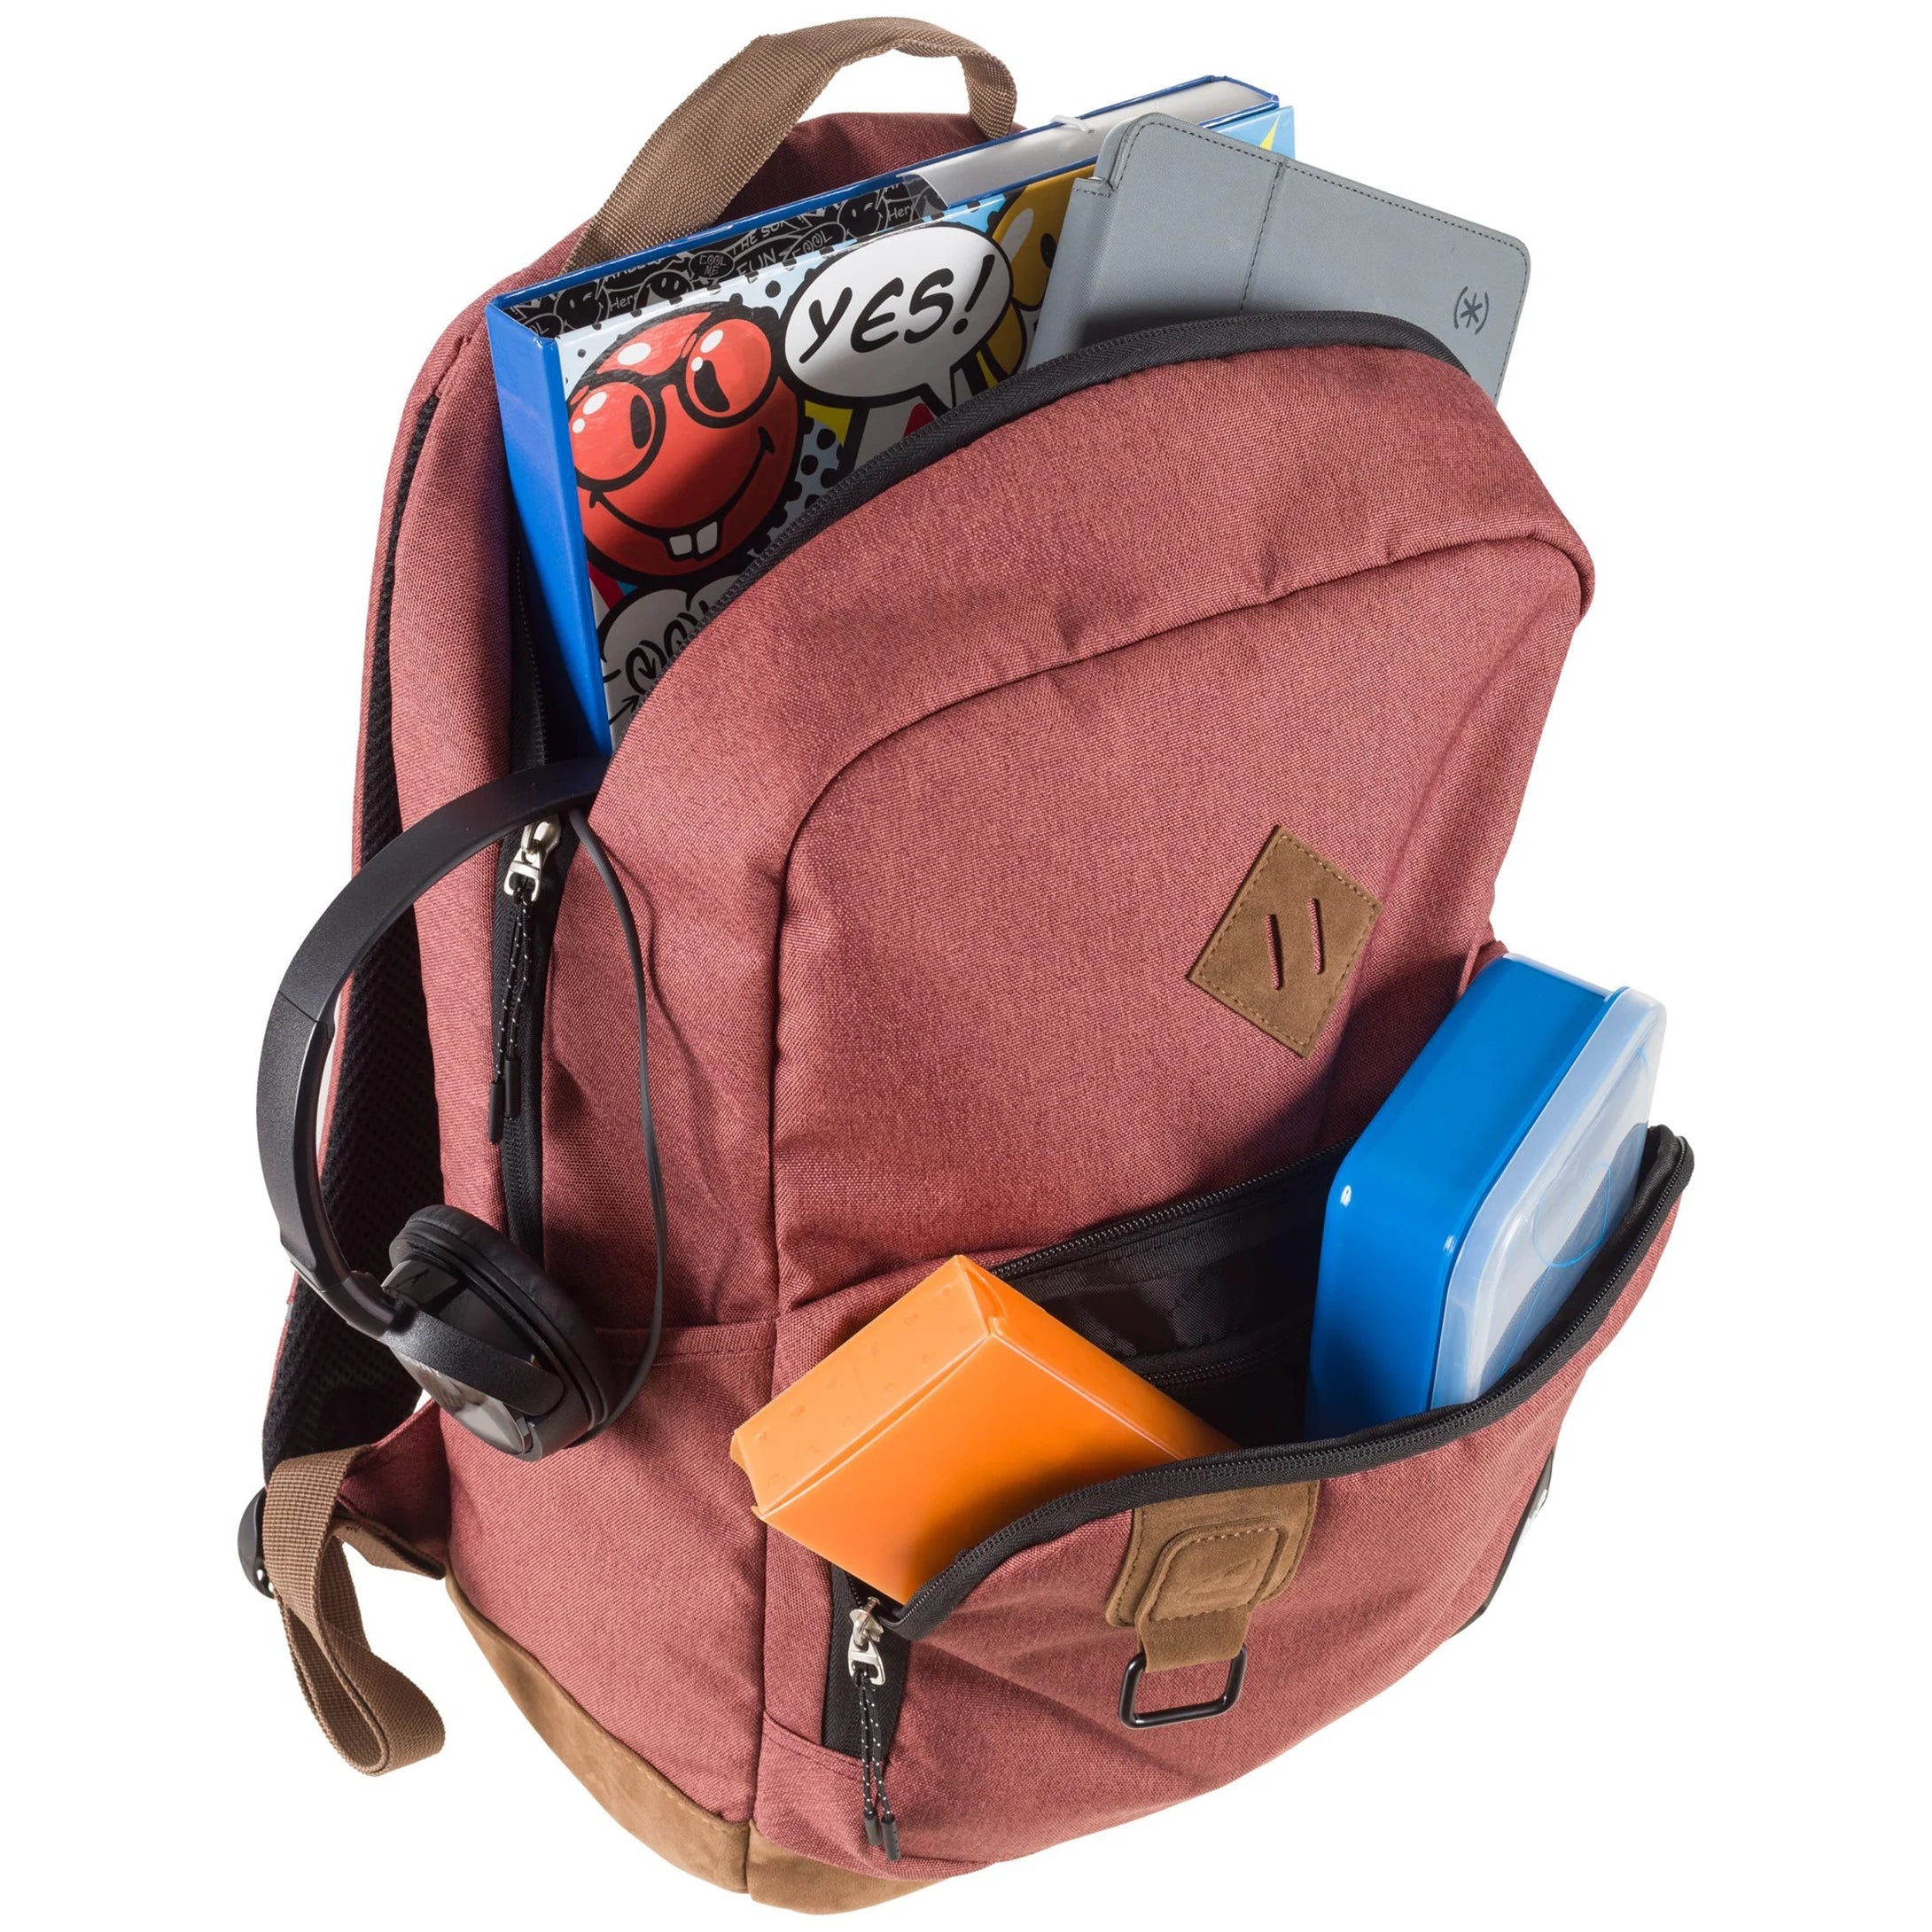 Walker Bags Pure Eco Backpack 46 cm - Grey